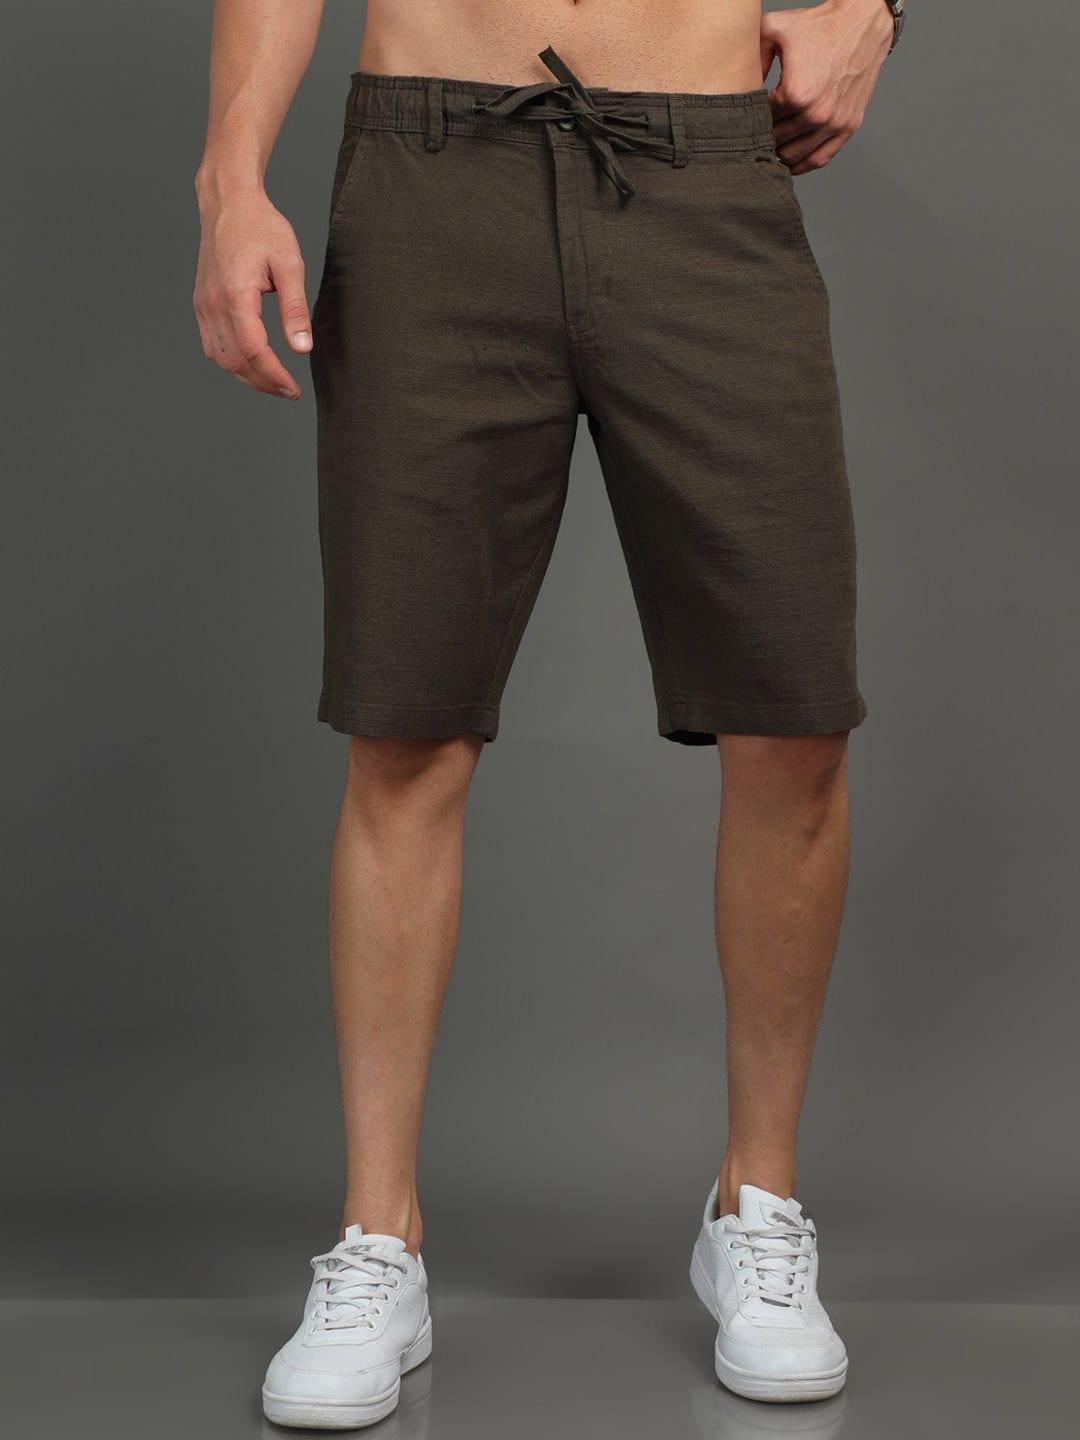 reslag-men-mid-rise-linen-shorts